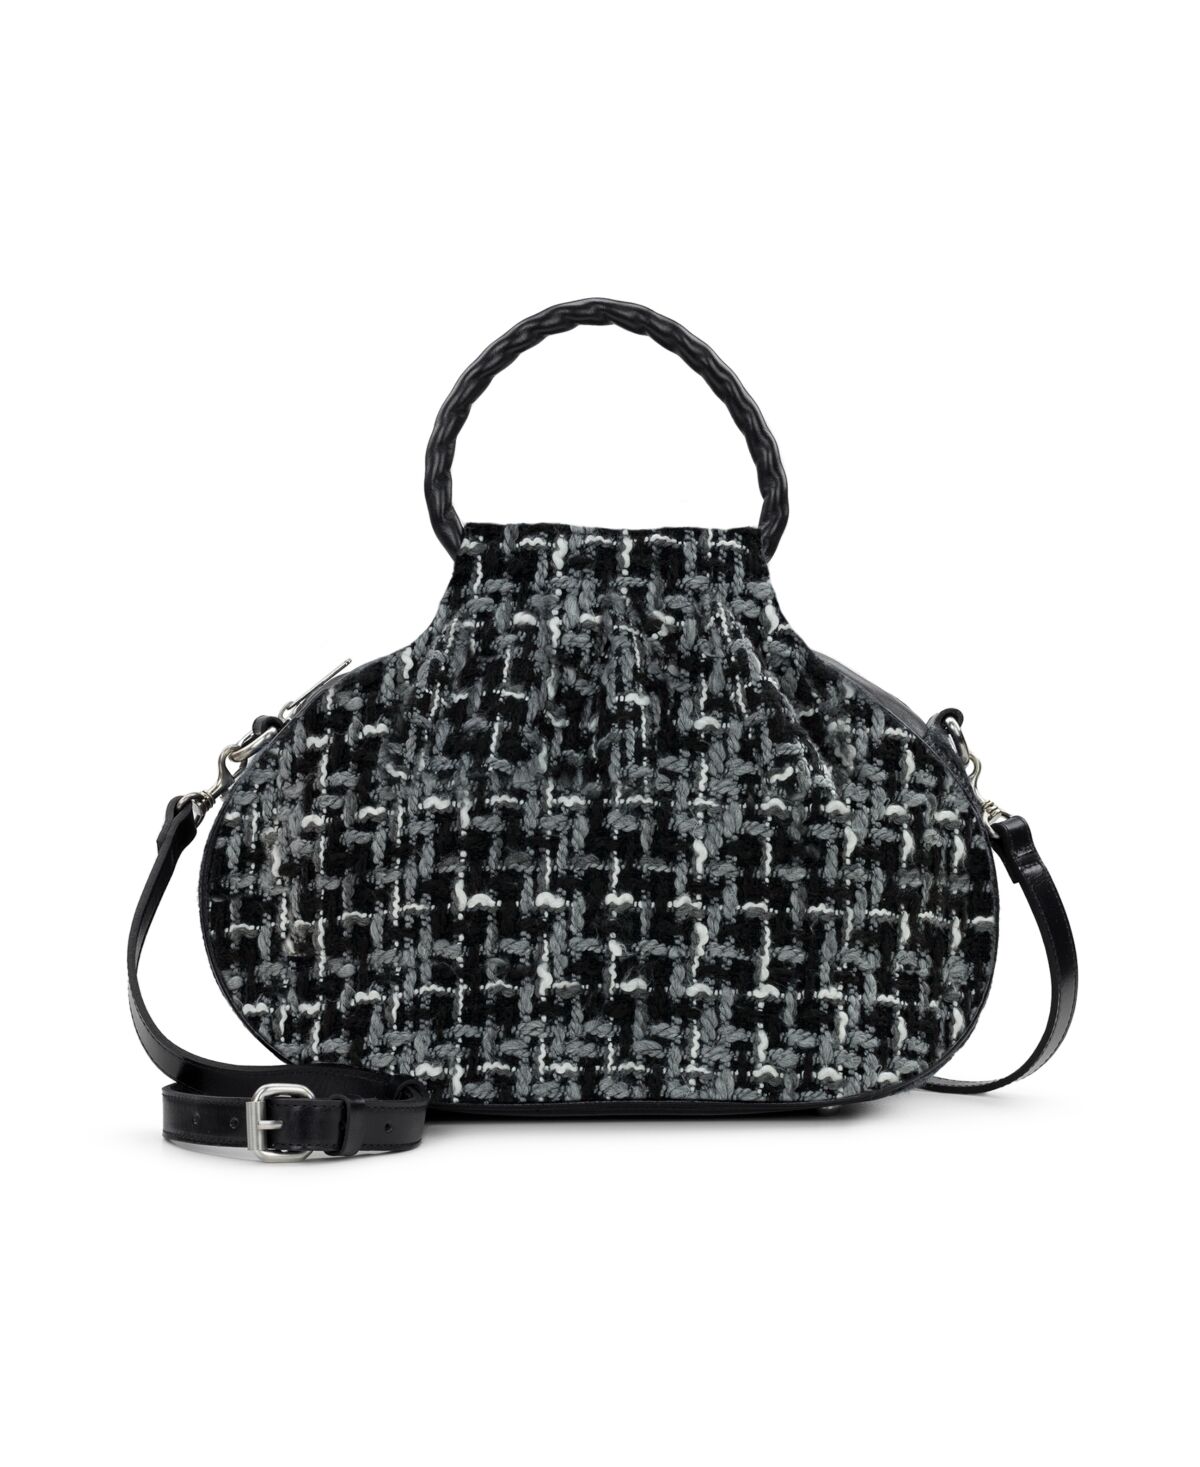 Patricia Nash Women's Linley Medium Crossbody Bag - Black